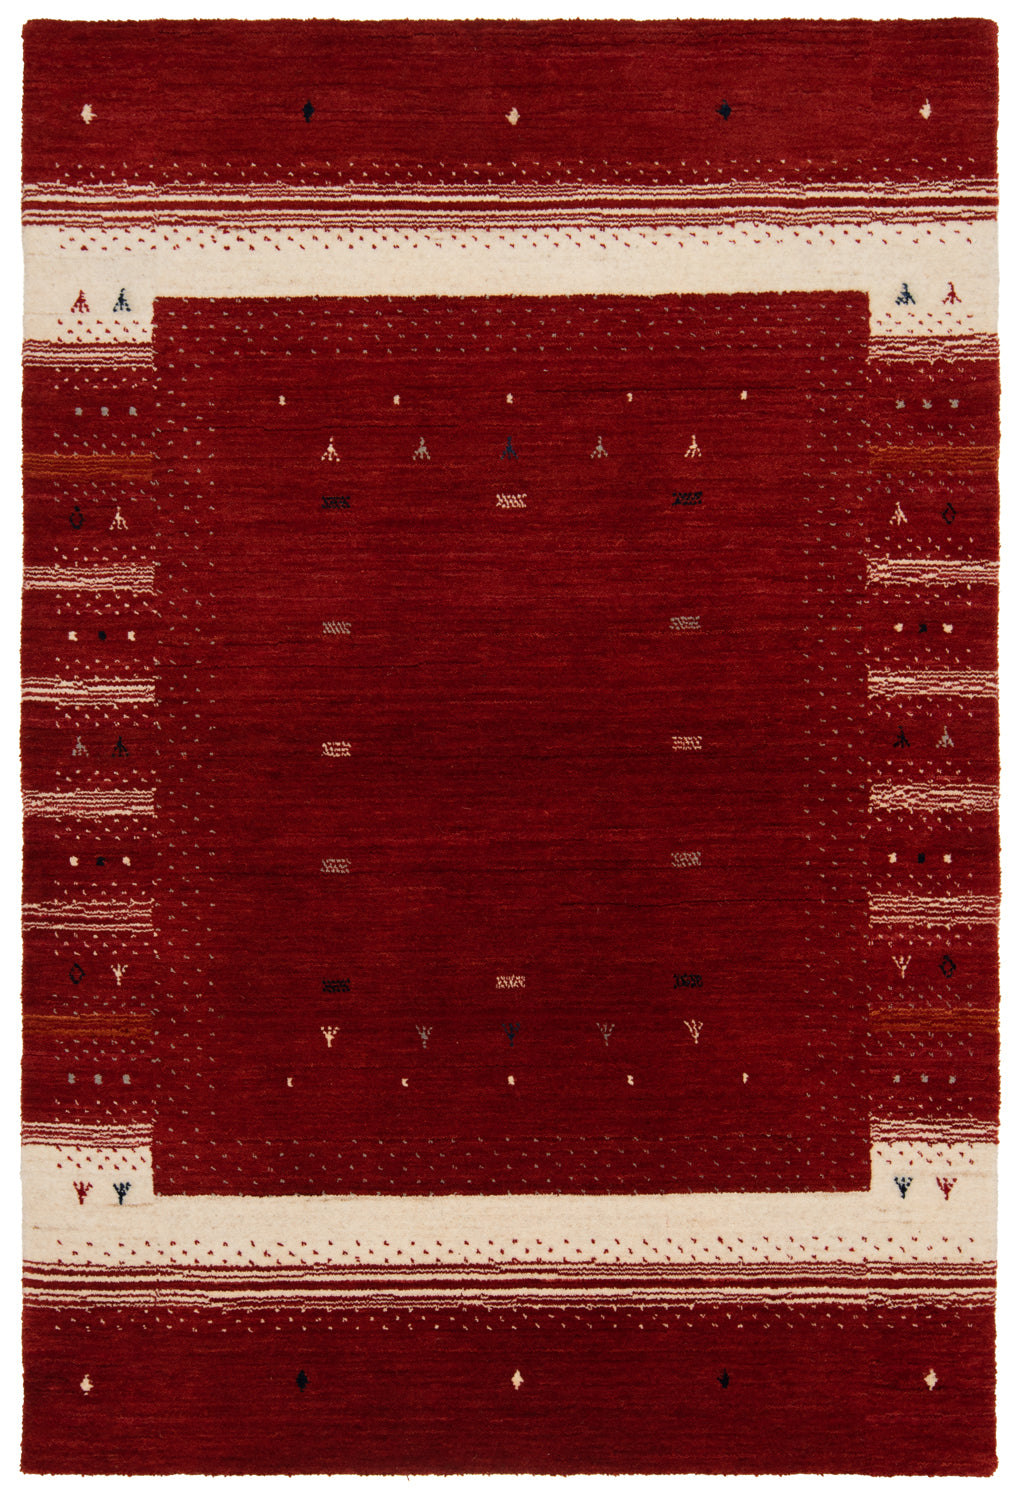 Carpet de tear manual | 159 x 100 cm